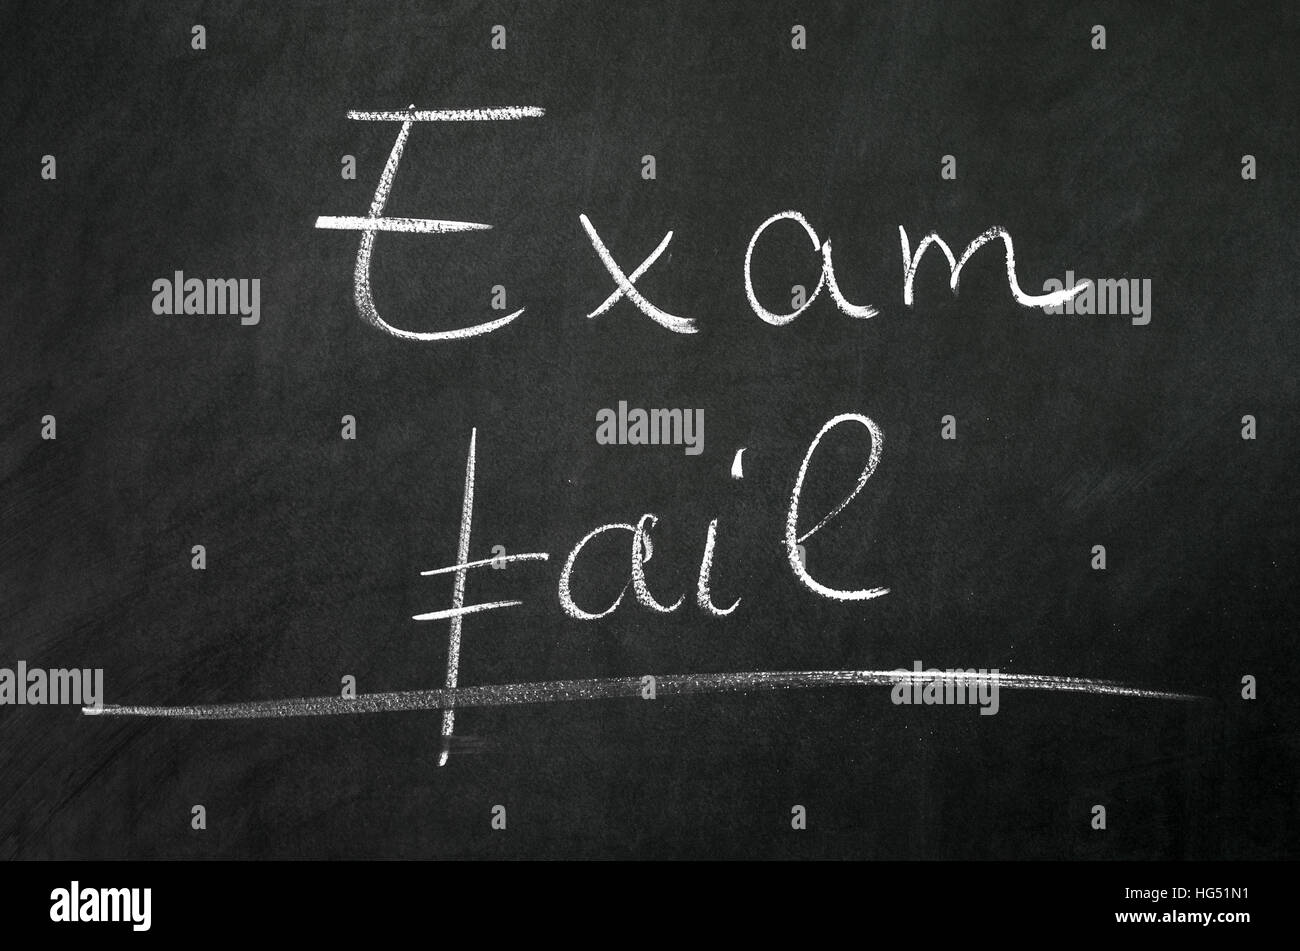 Exam fail writed on blackboard with chalk Stock Photo